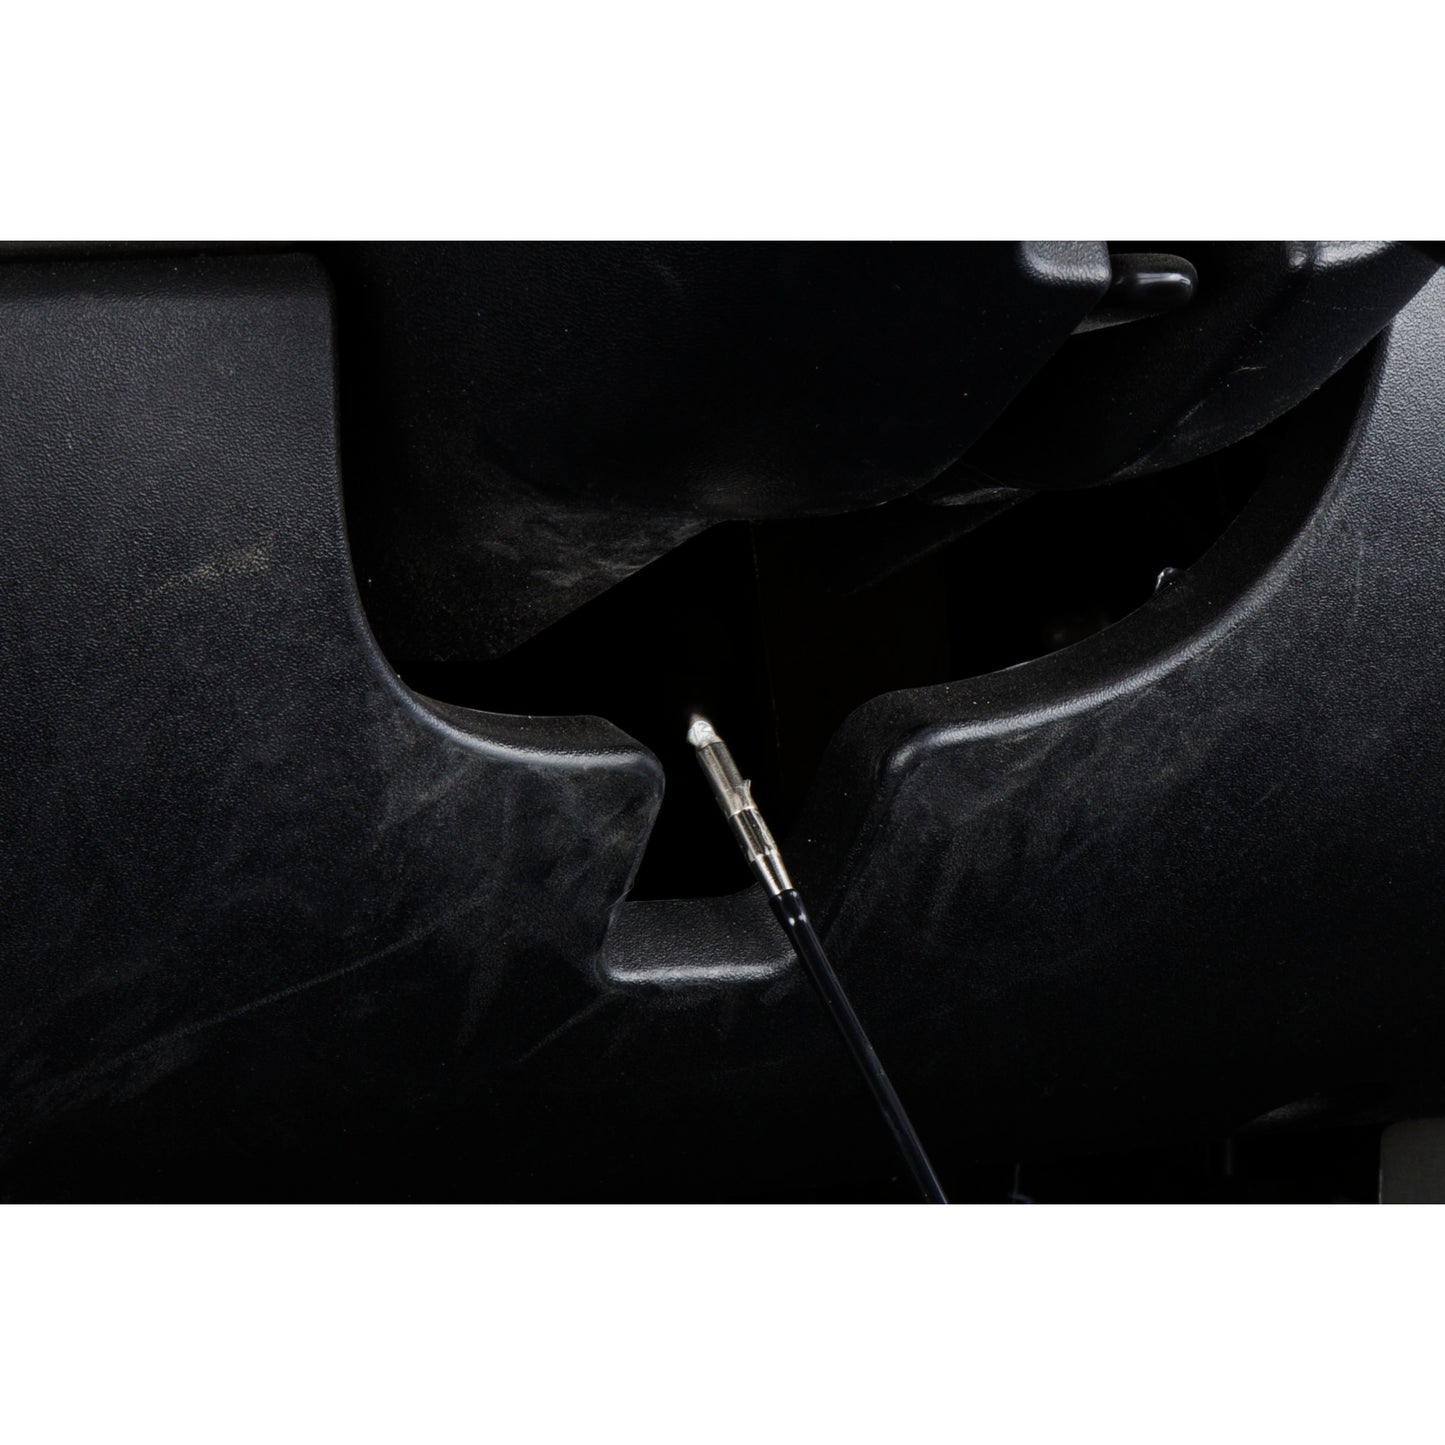 16-inch Flexible Gooseneck Bend-A-Light Pro Inspection Light